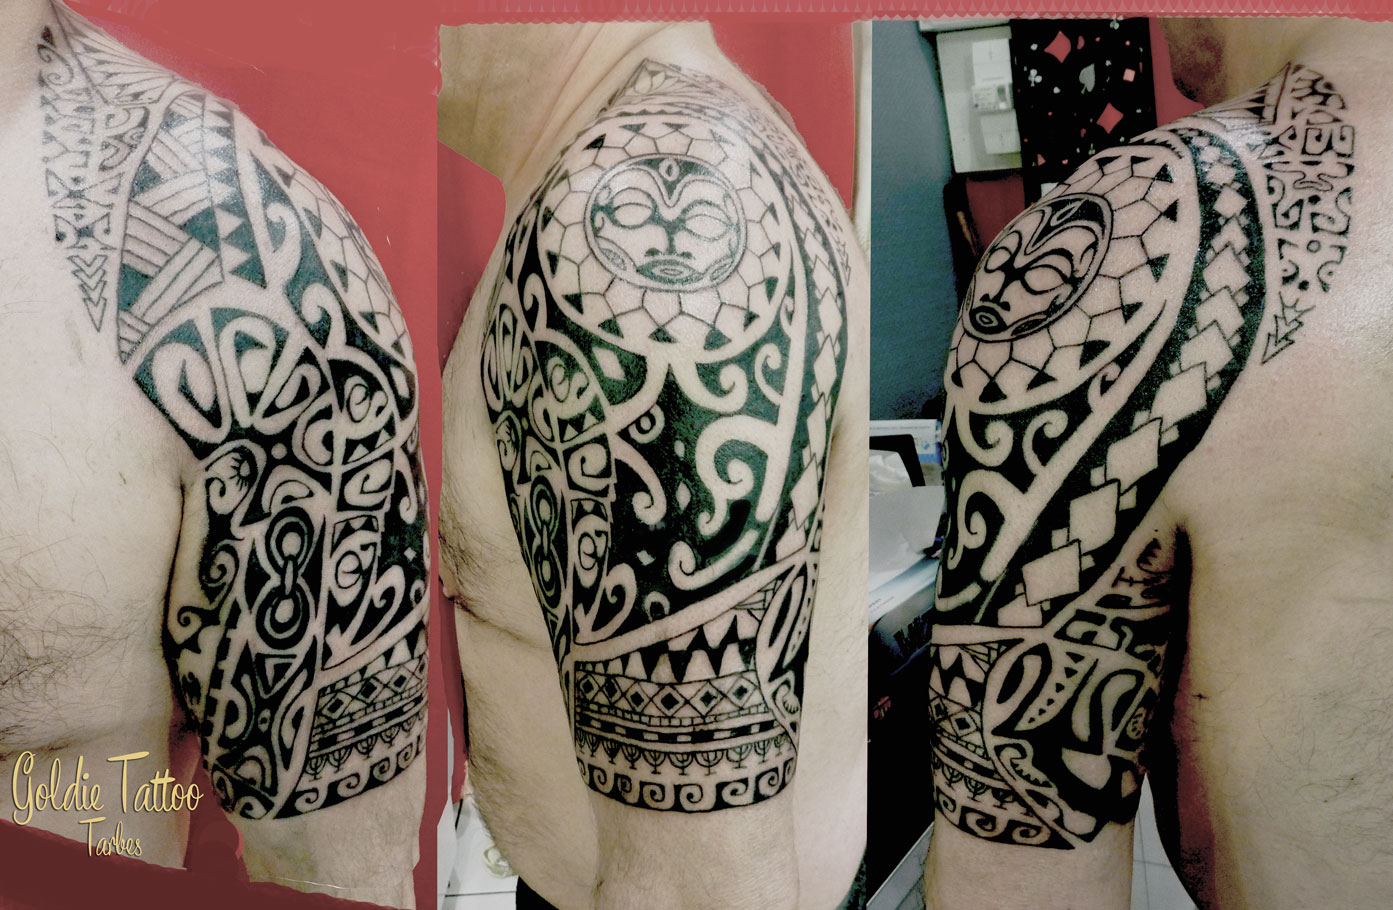 Goldie-tattoo-tarbes.avril2015.couverture-ancre-marine-par-maori.web.jpg